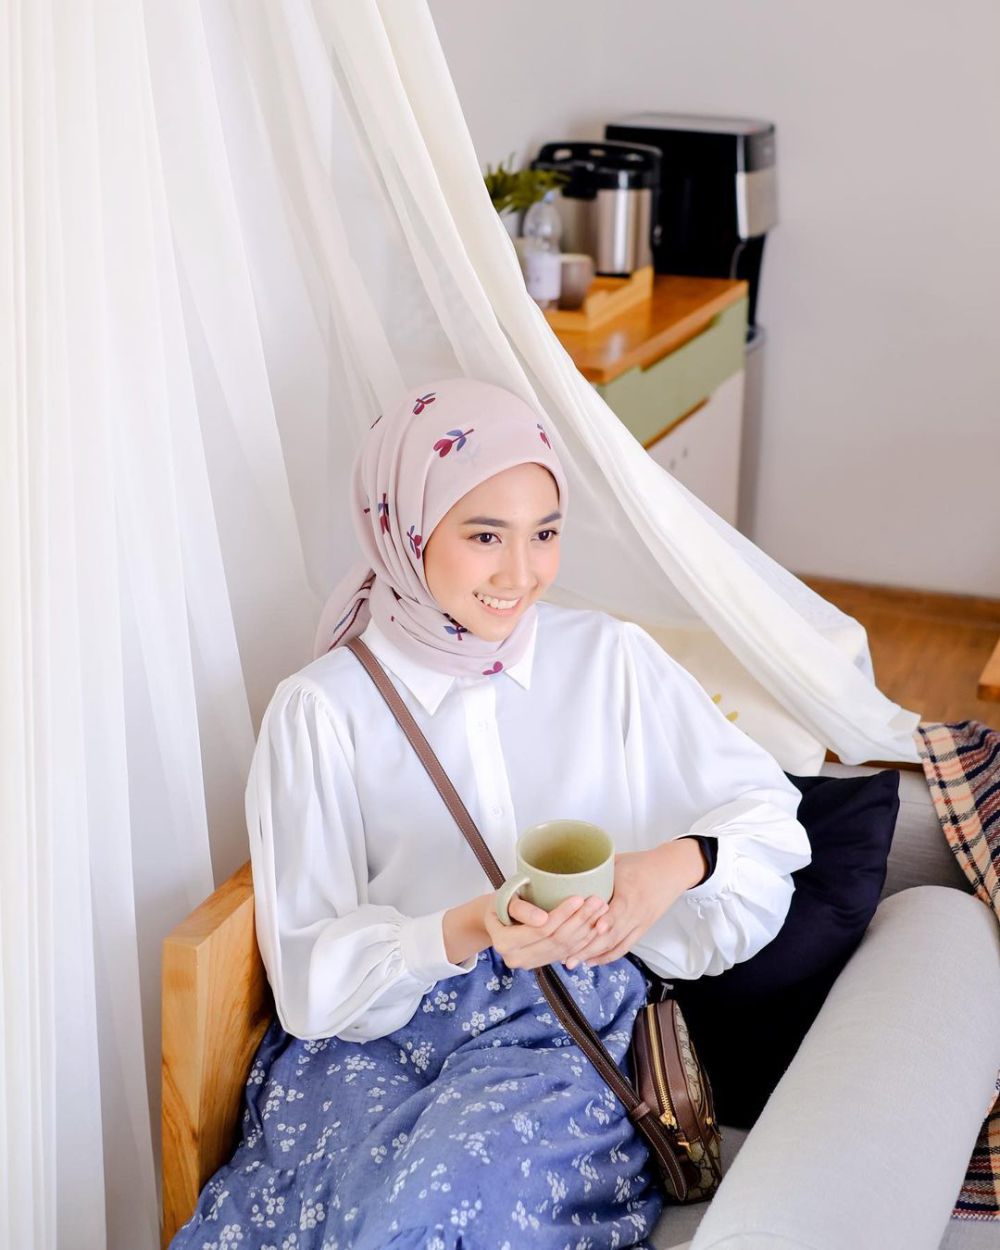 9 Ide Styling Hijab Pattern ala Richa Etika Ulhaq, Super Catchy! 